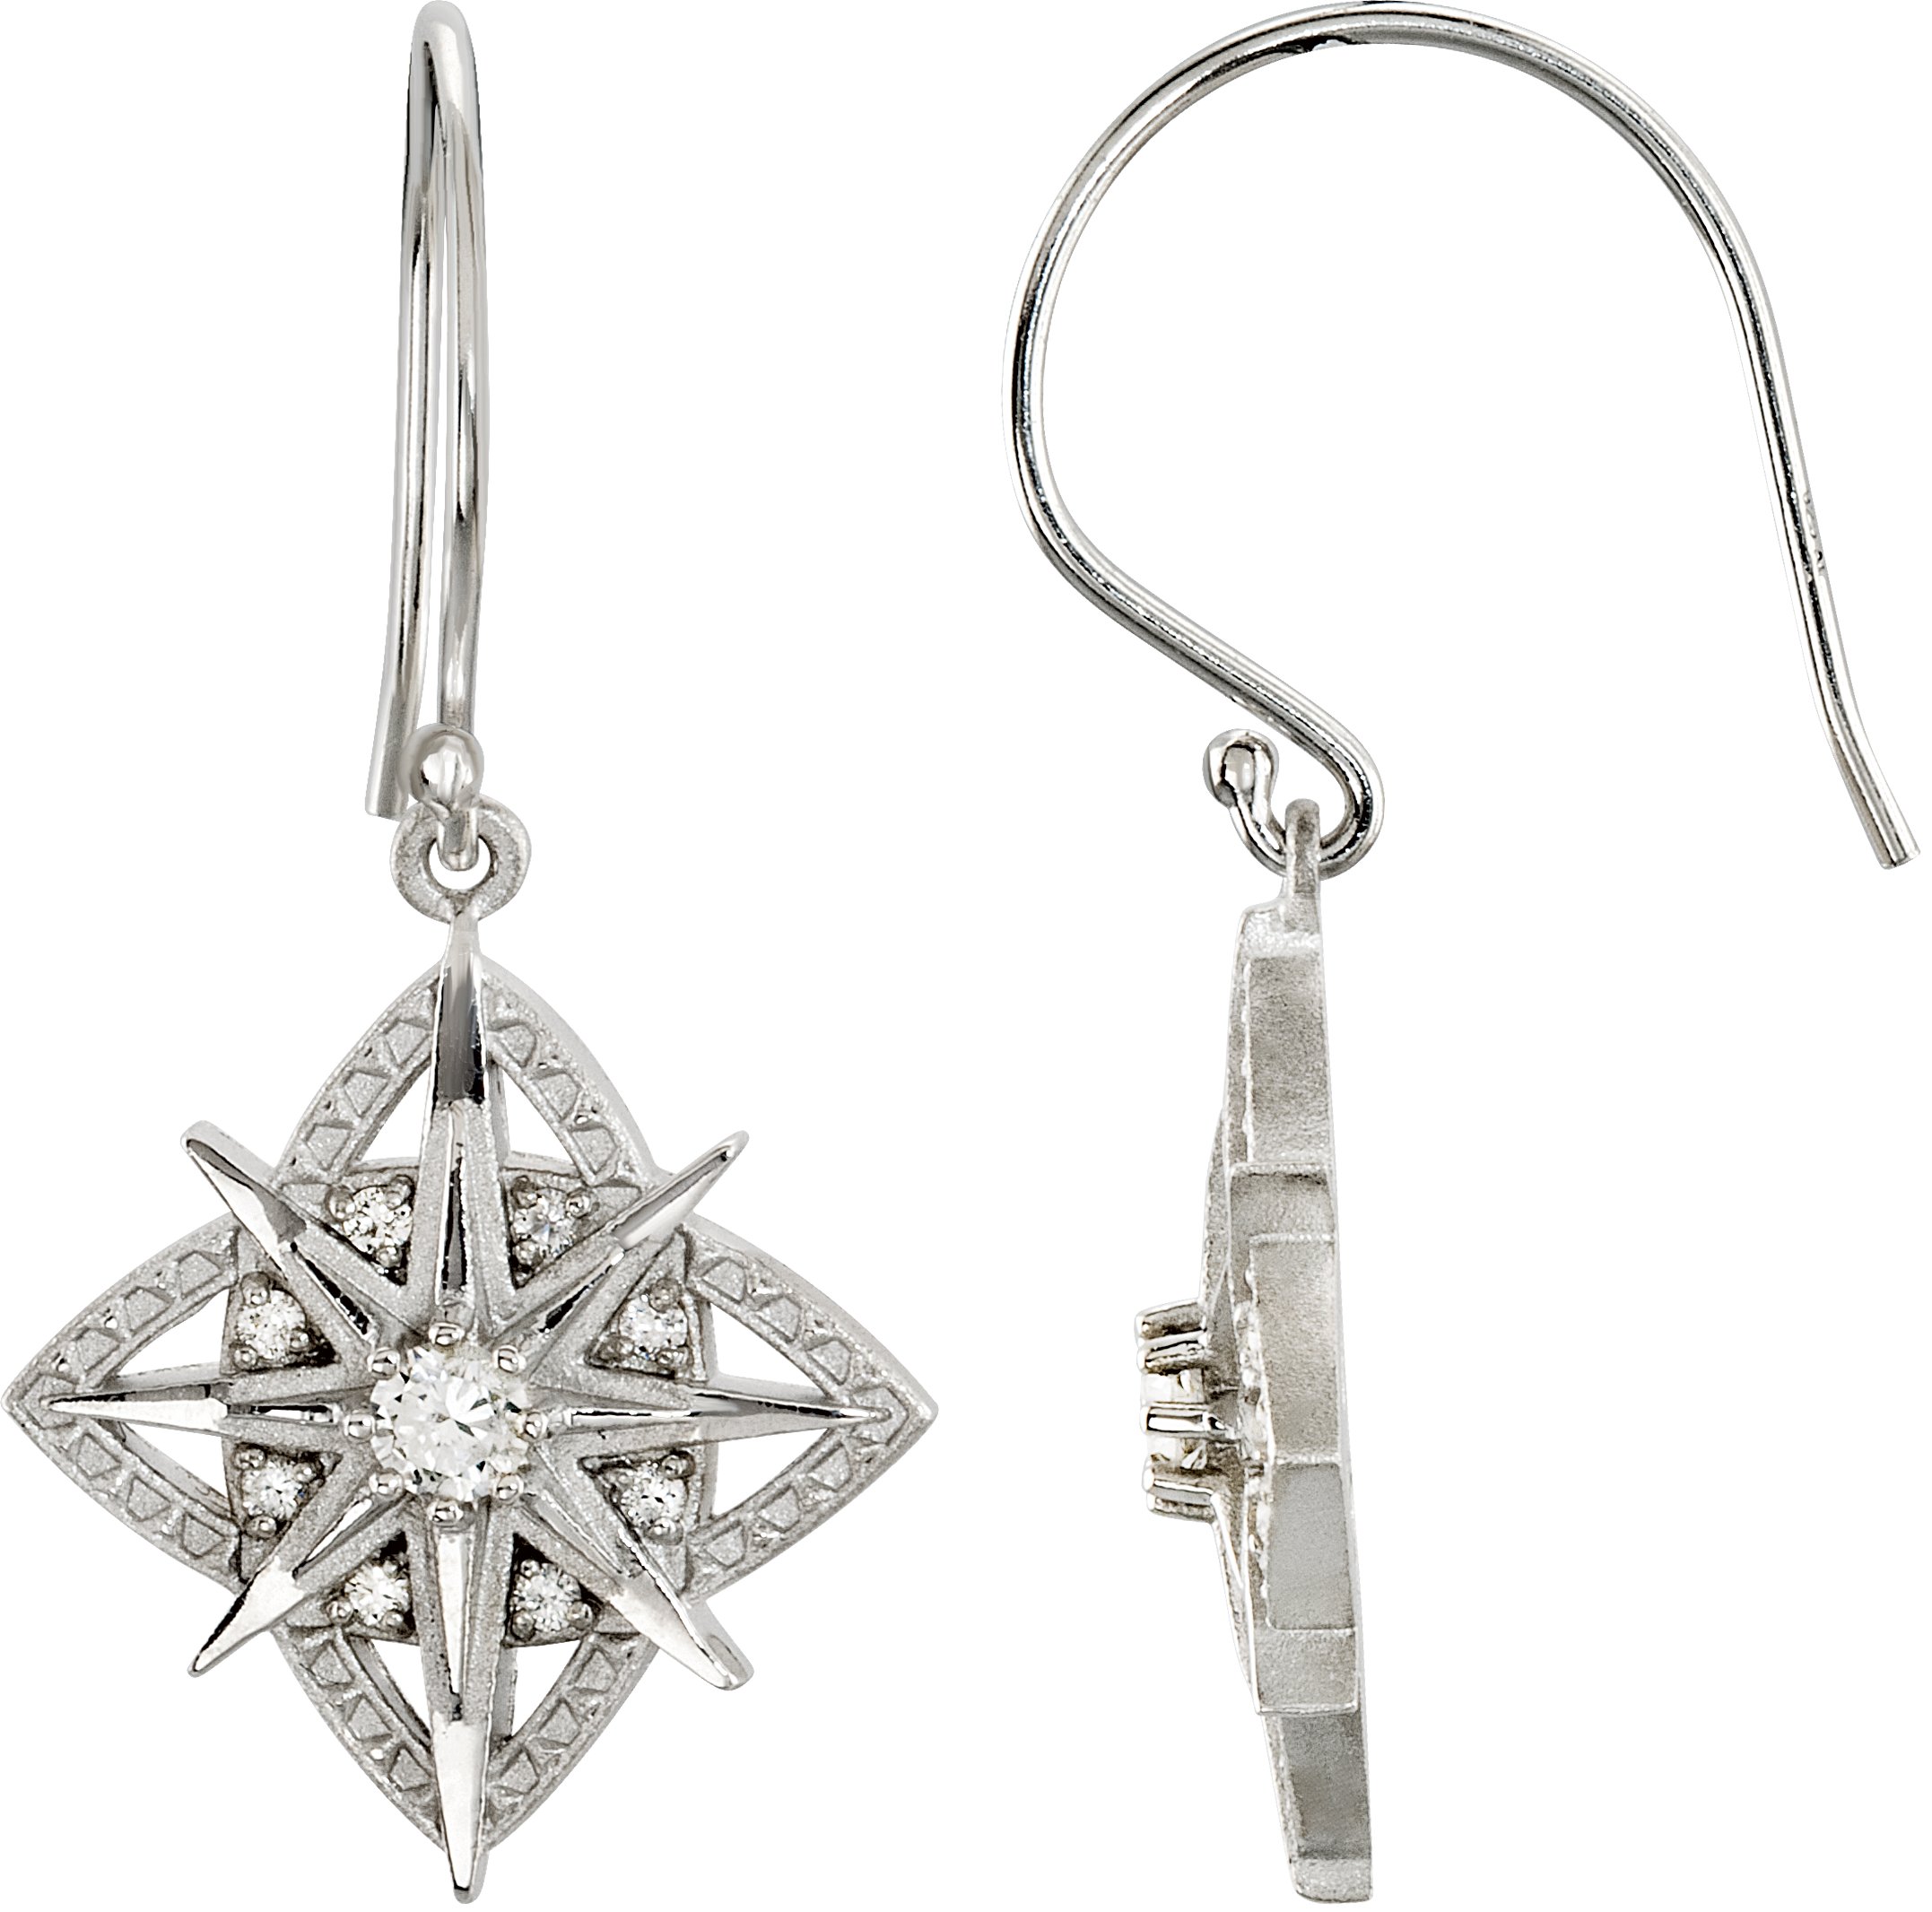 Diamond Vintage Design Earrings or Mounting